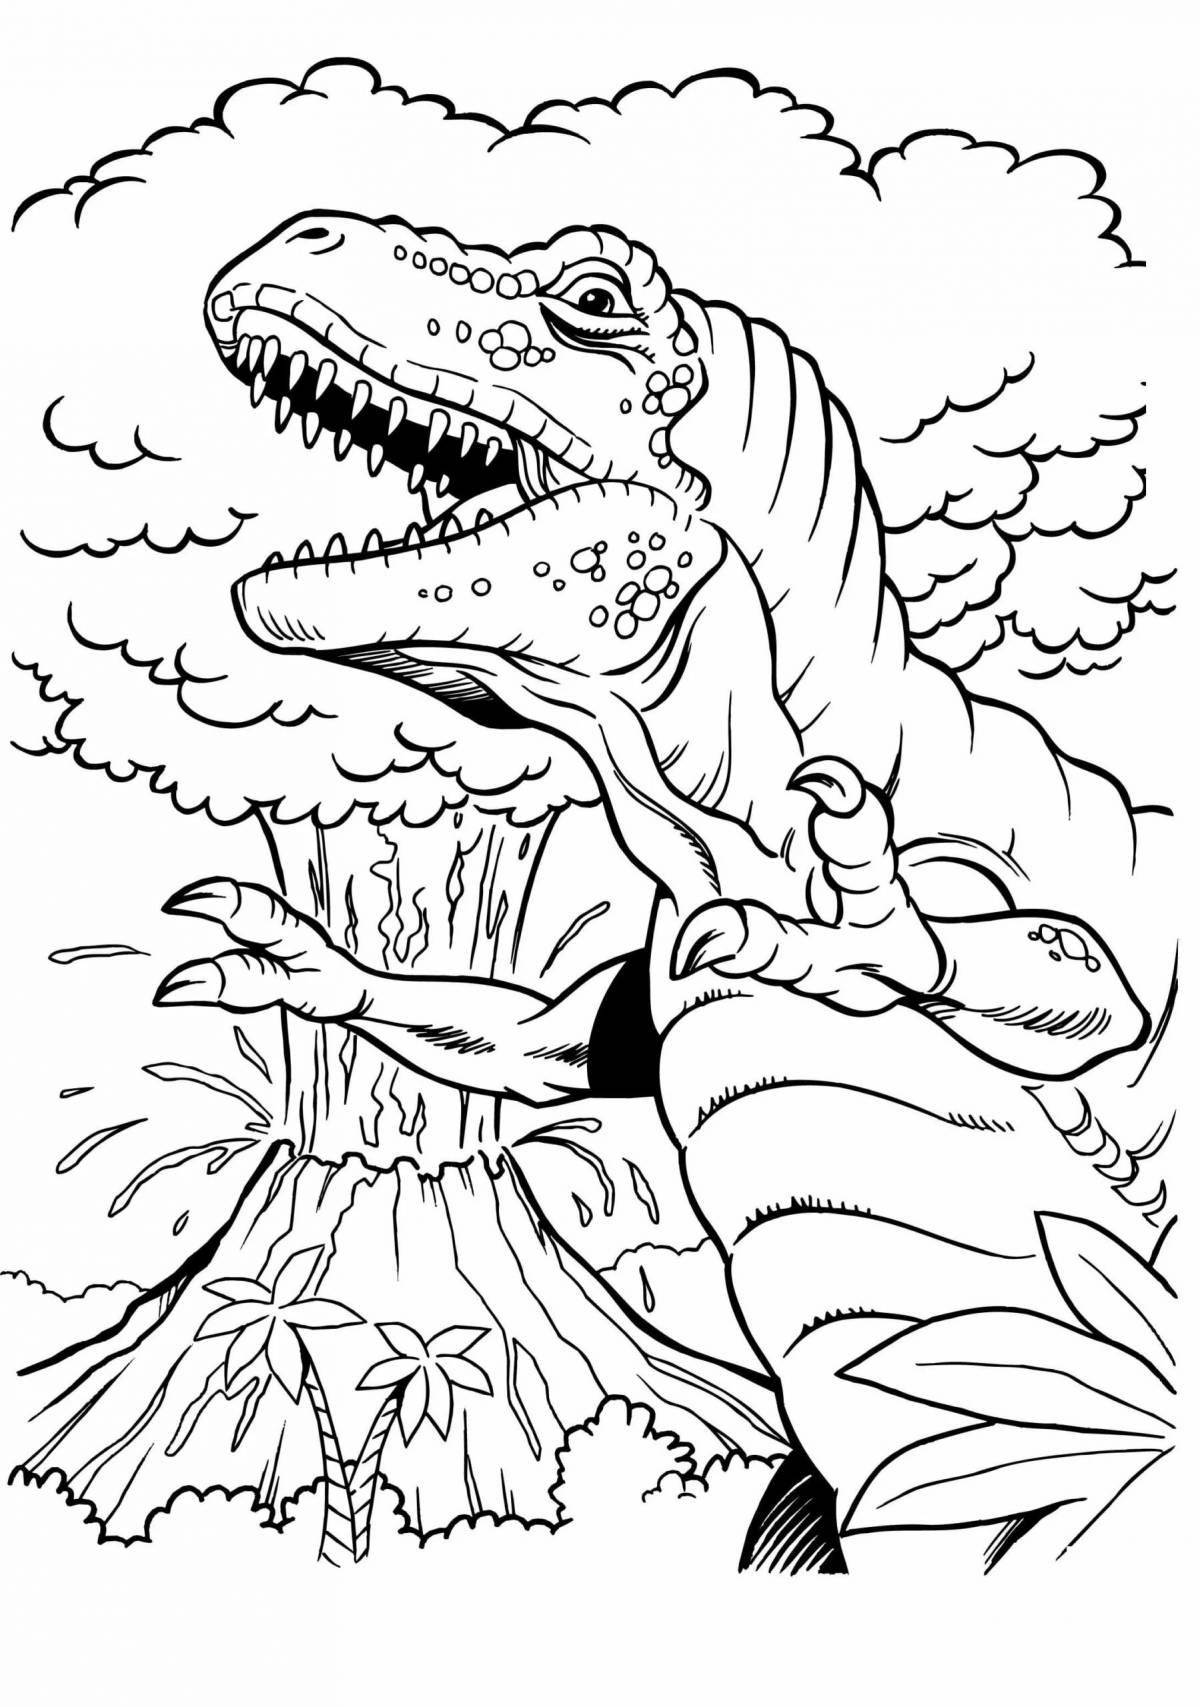 Joyful t-rex coloring book